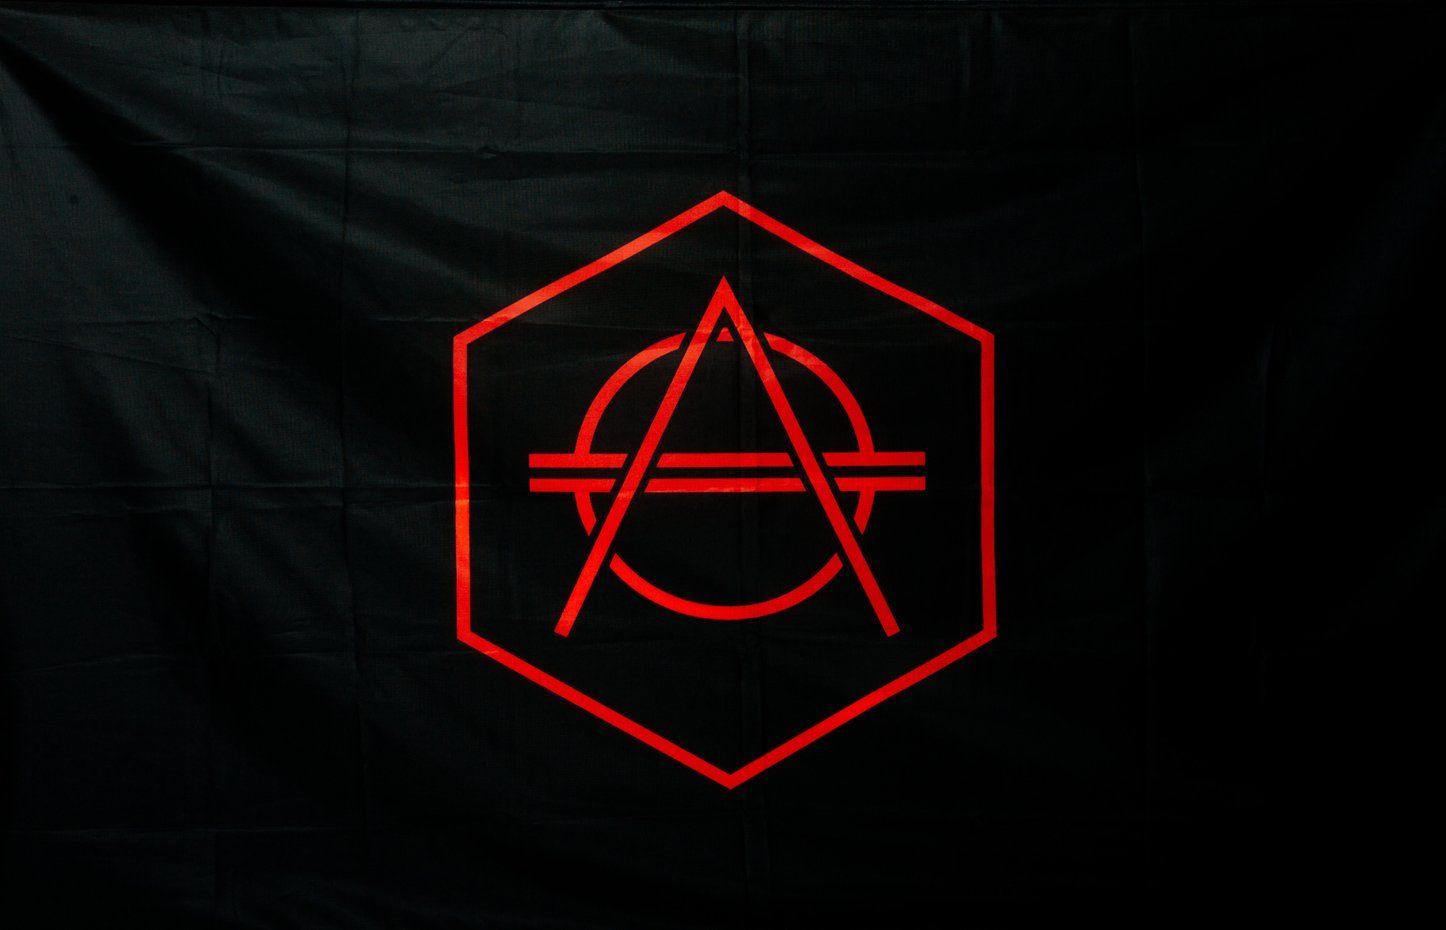 Hexagon White Triangle Red Logo - Official Don Diablo Flag black with red logo – HEXAGON